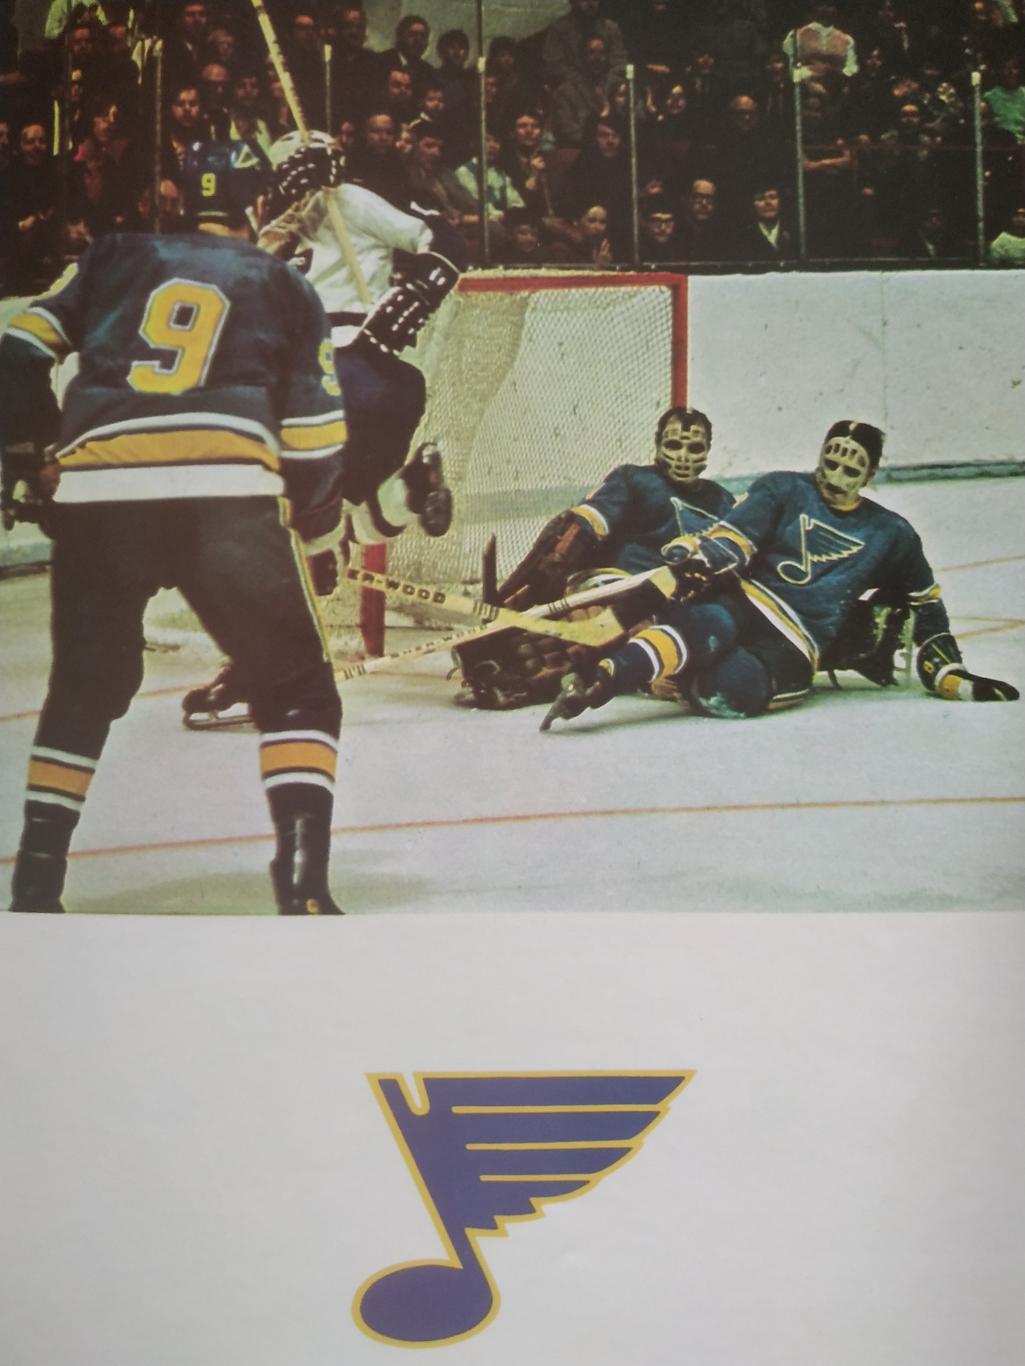 ХОККЕЙ ПРОГРАММА АЛЬБОМ СЕНТ ЛУИС НХЛ NHL 1971 NOV.03 ST. LOUIS PROGRAM 4